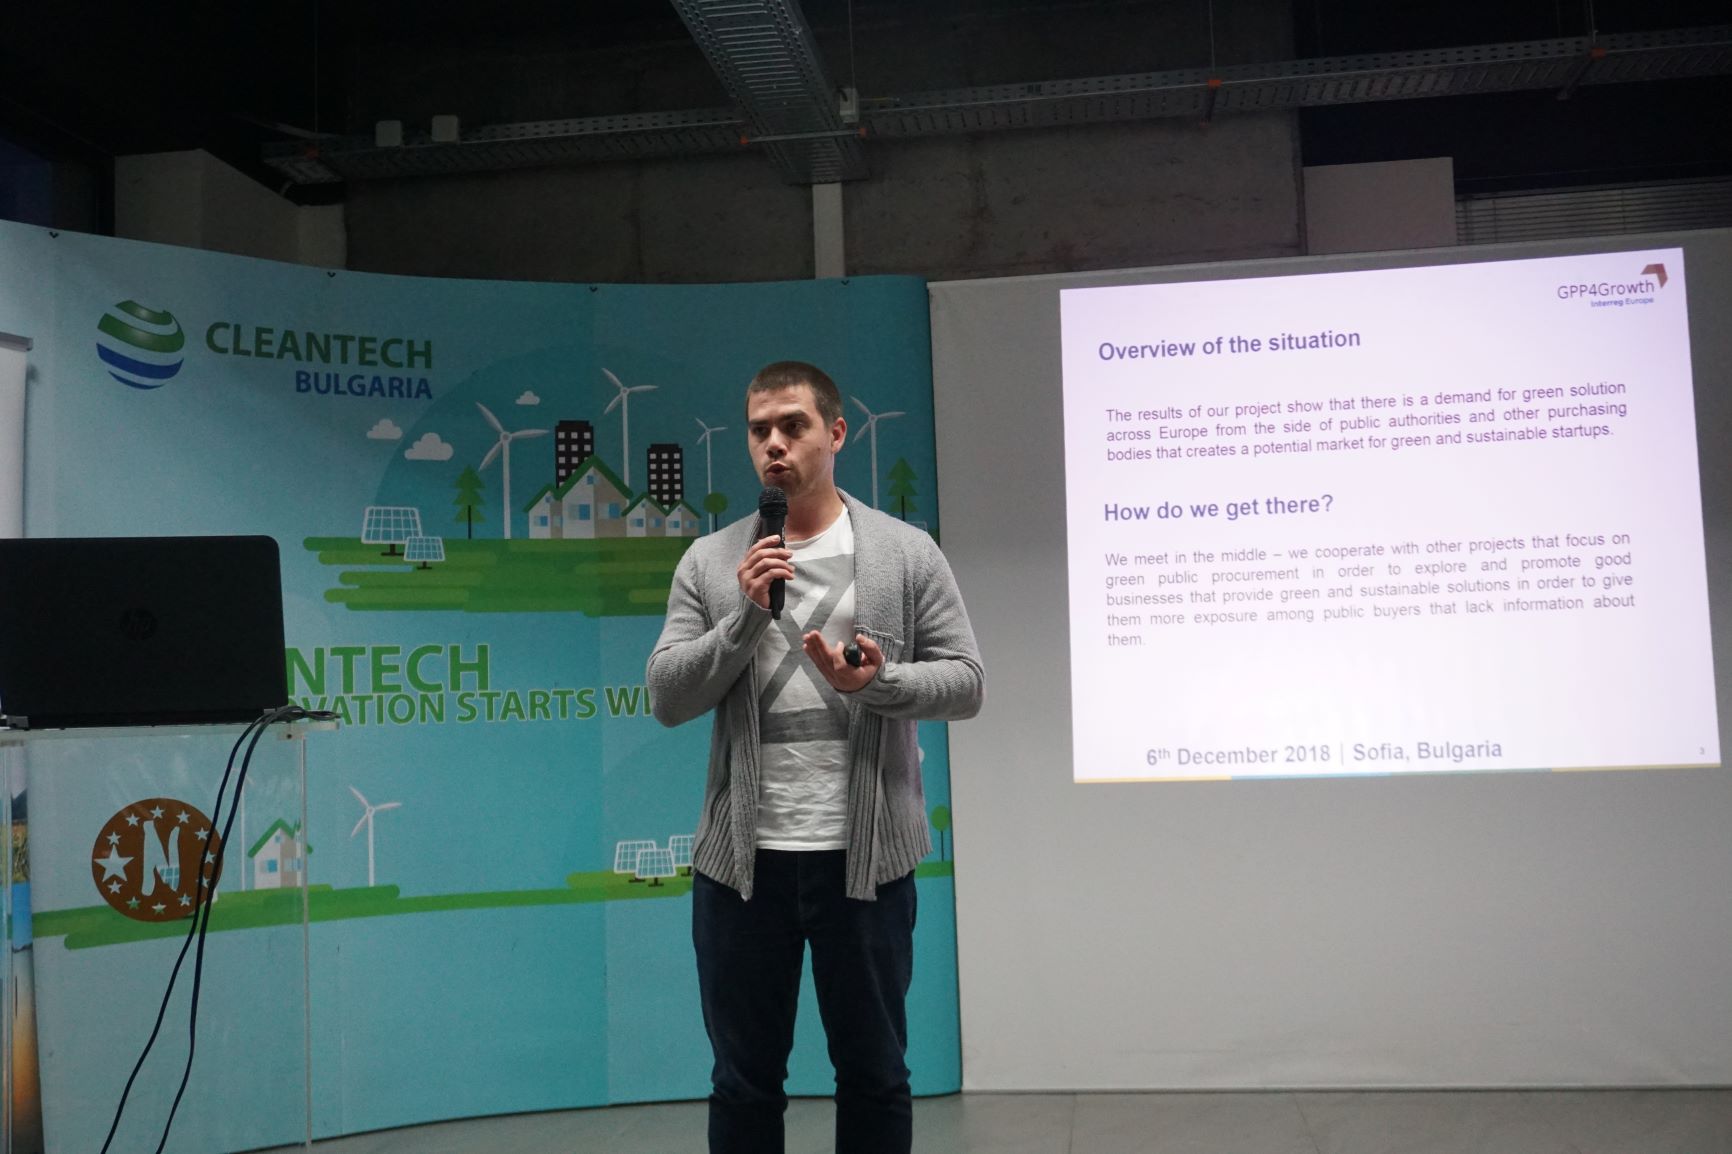 GPP4Growth represented @ Cleantech Bulgaria event